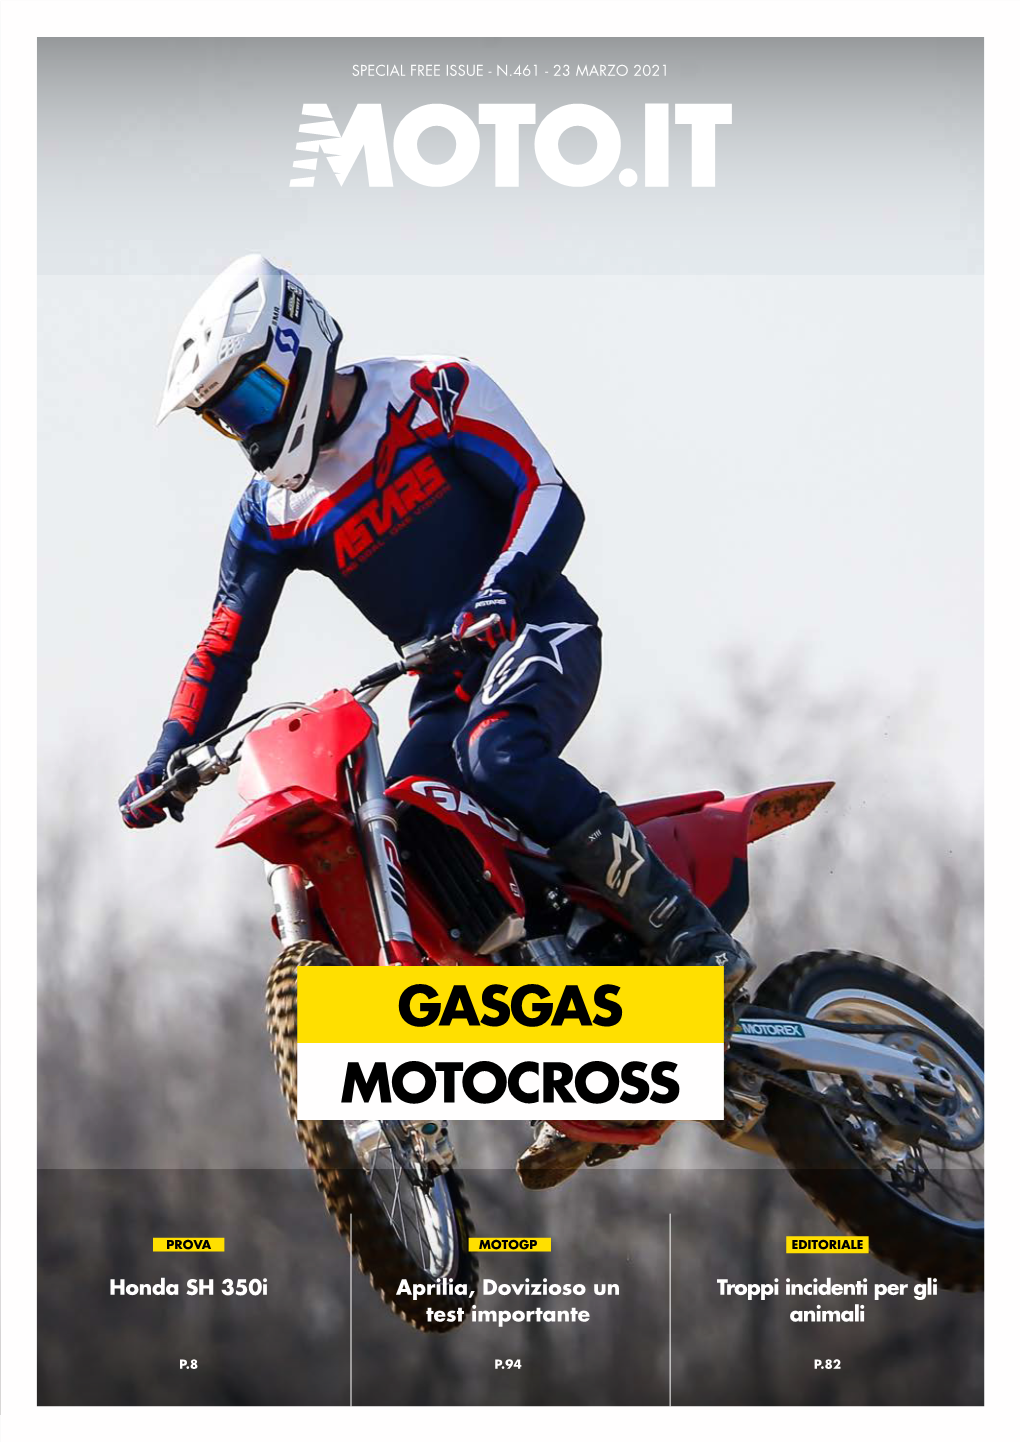 Gasgas Motocross